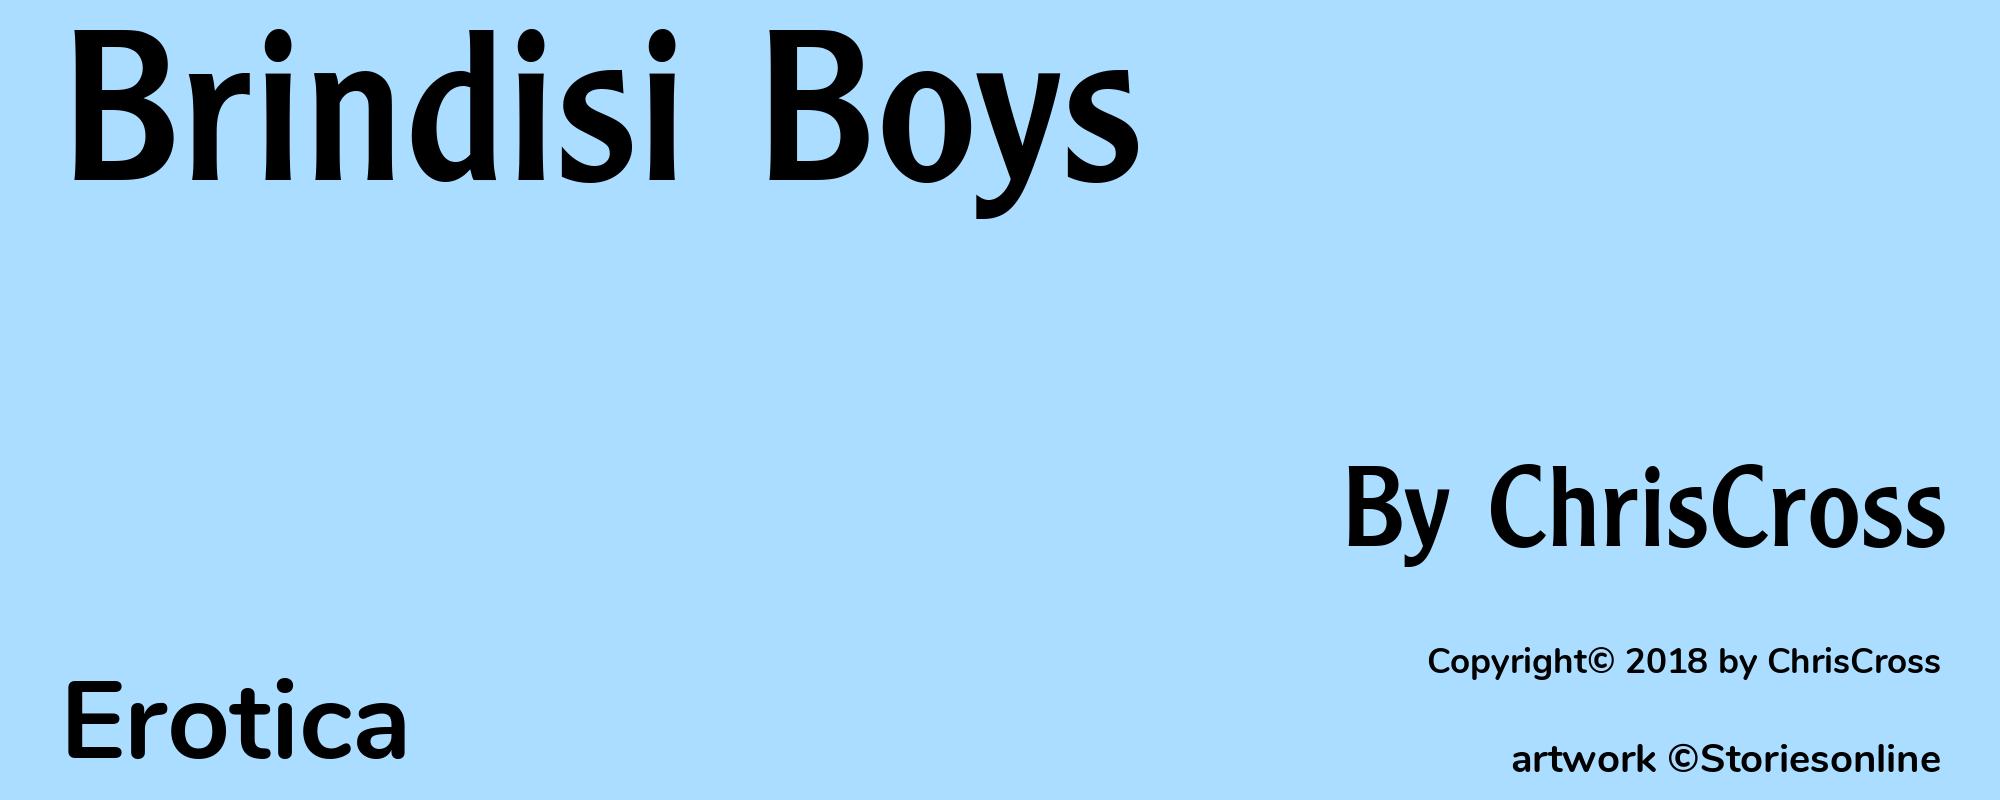 Brindisi Boys - Cover